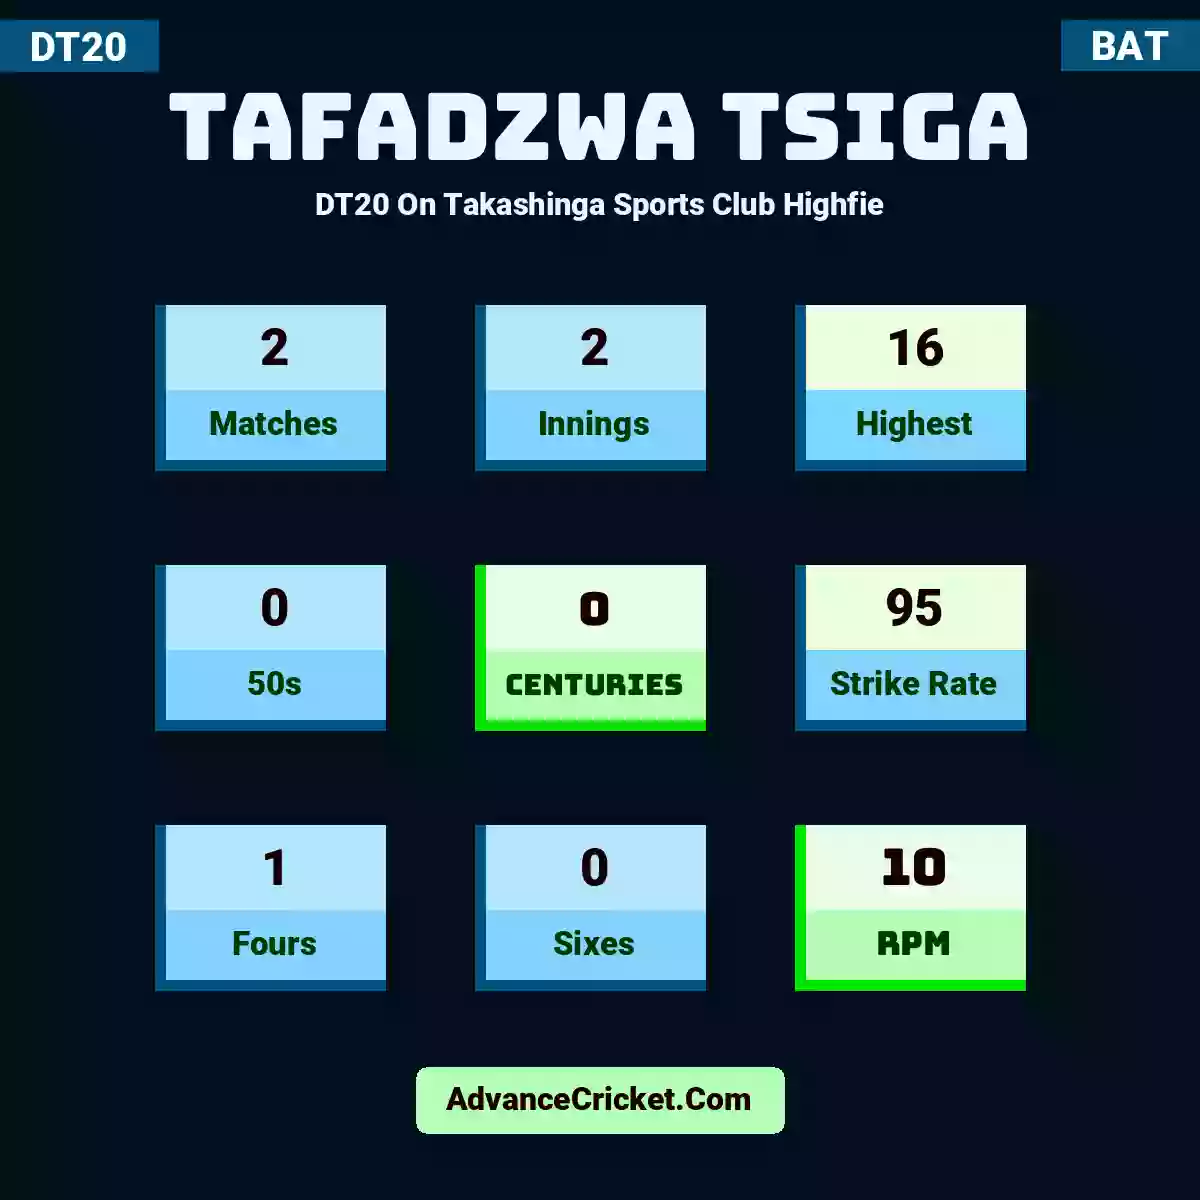 Tafadzwa Tsiga DT20  On Takashinga Sports Club Highfie, Tafadzwa Tsiga played 2 matches, scored 16 runs as highest, 0 half-centuries, and 0 centuries, with a strike rate of 95. T.Tsiga hit 1 fours and 0 sixes, with an RPM of 10.